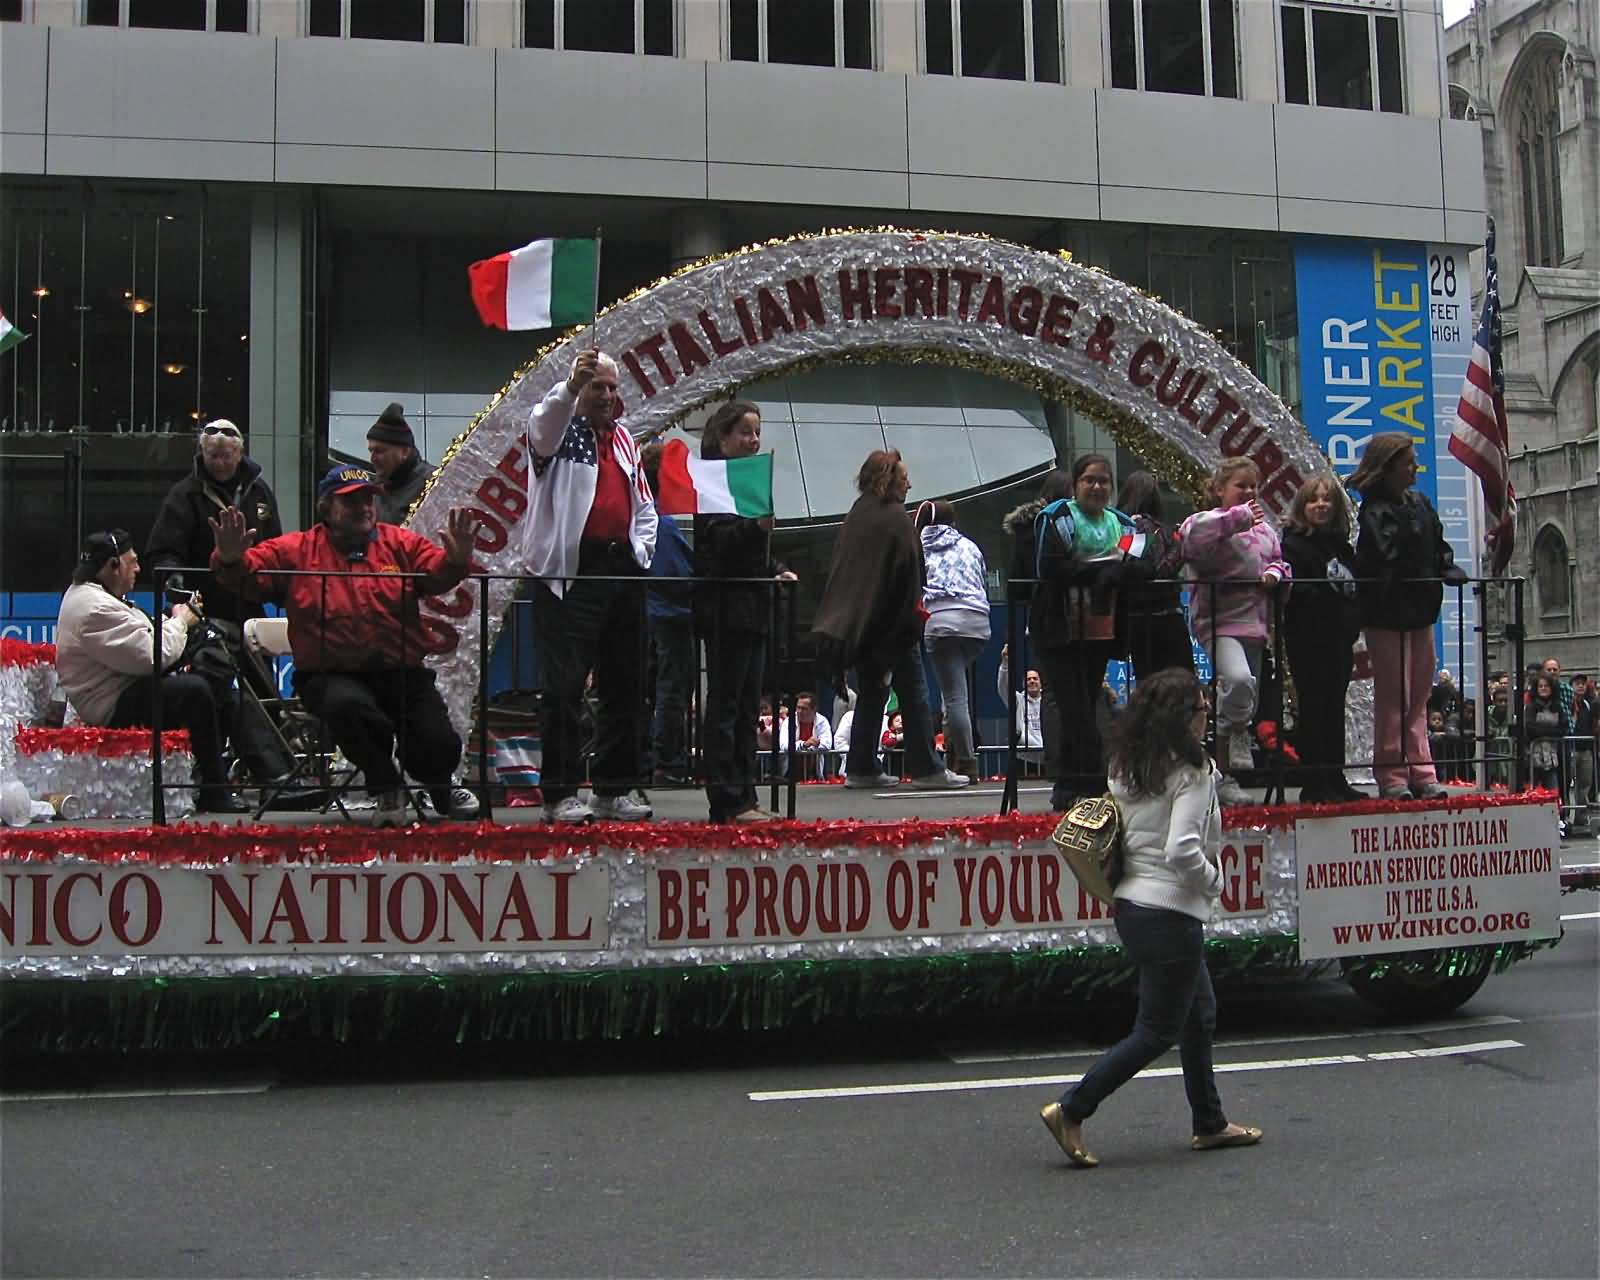 Columbus Day Parade Float Image